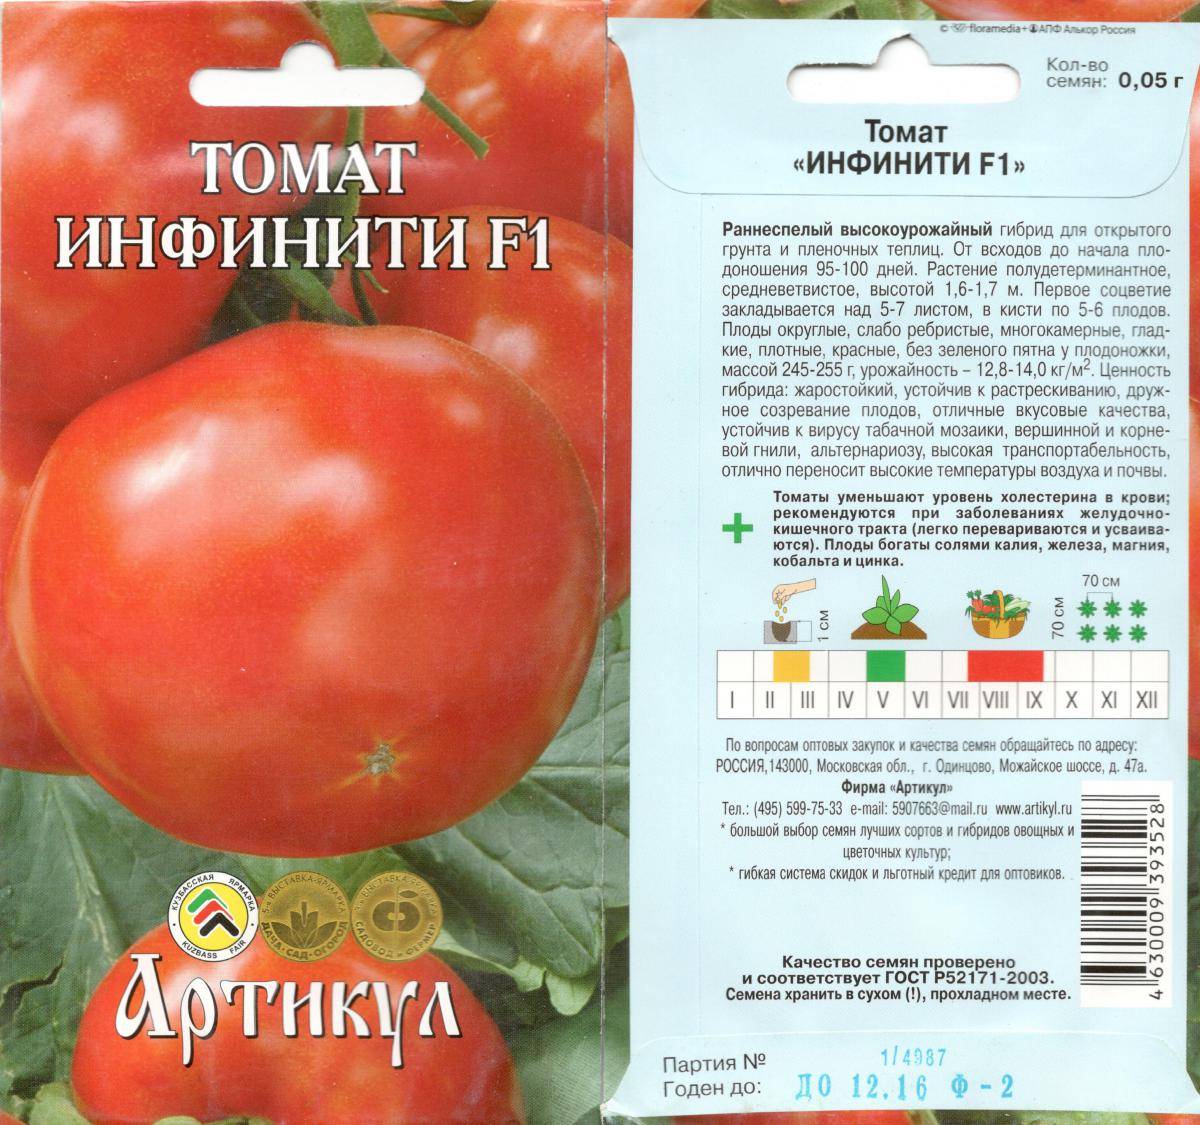 Томат «паленка f1»: характеристика и описание гибрида помидор с фото, отзывы об урожайности